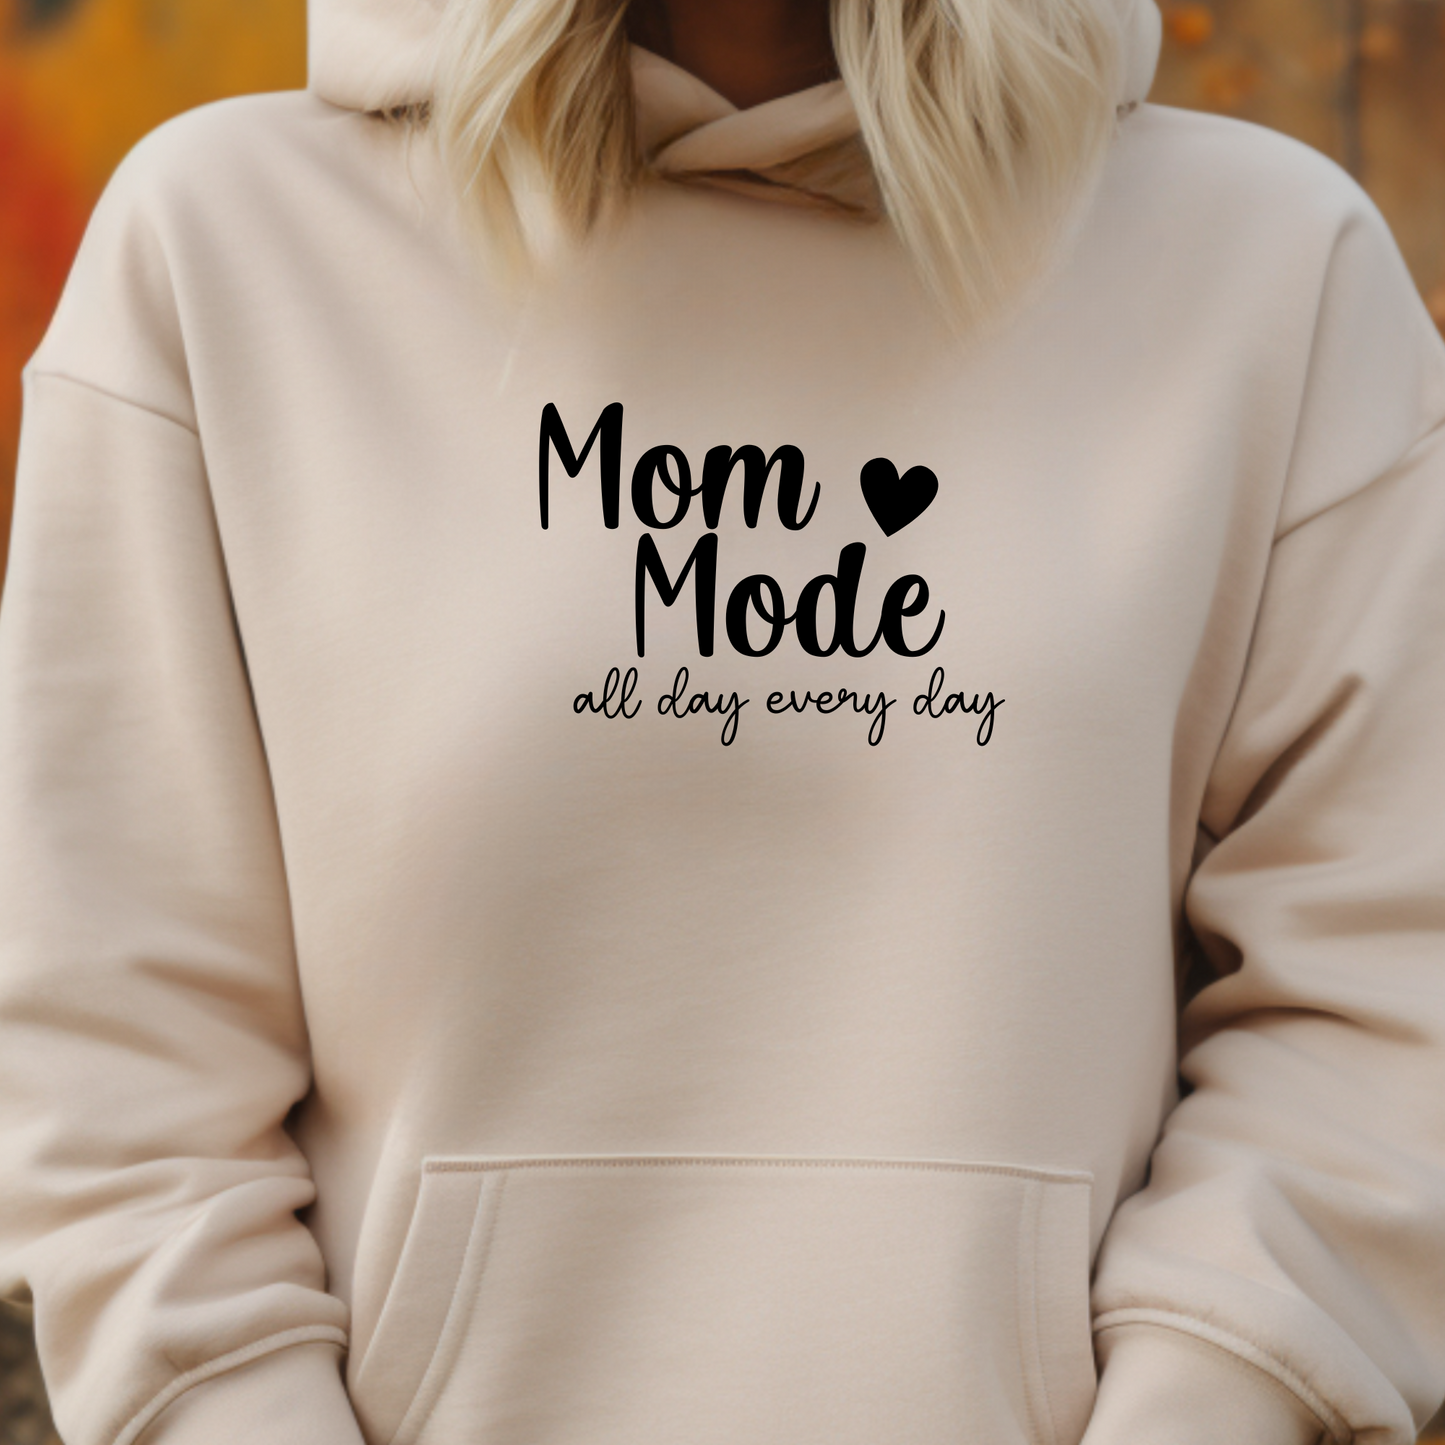 Hoodie / Pulli "mom mode"